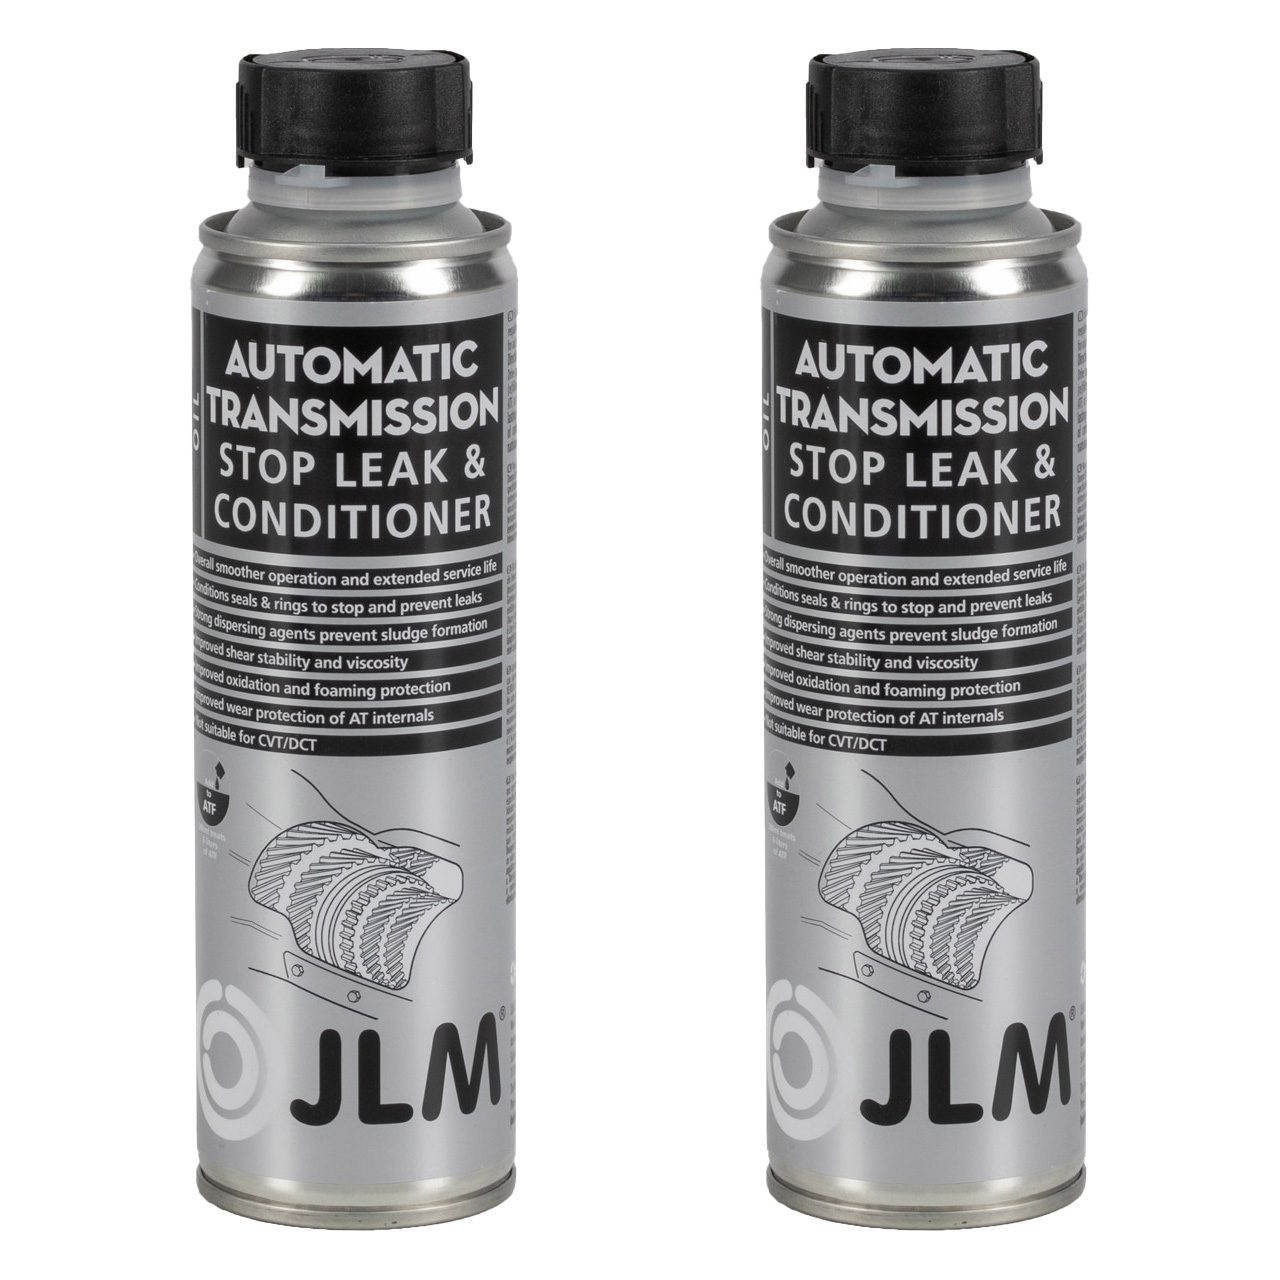 2x 250ml JLM Automatic Transmission Stop Leak & Conditioner Getriebe Abdichter Leck-Stop